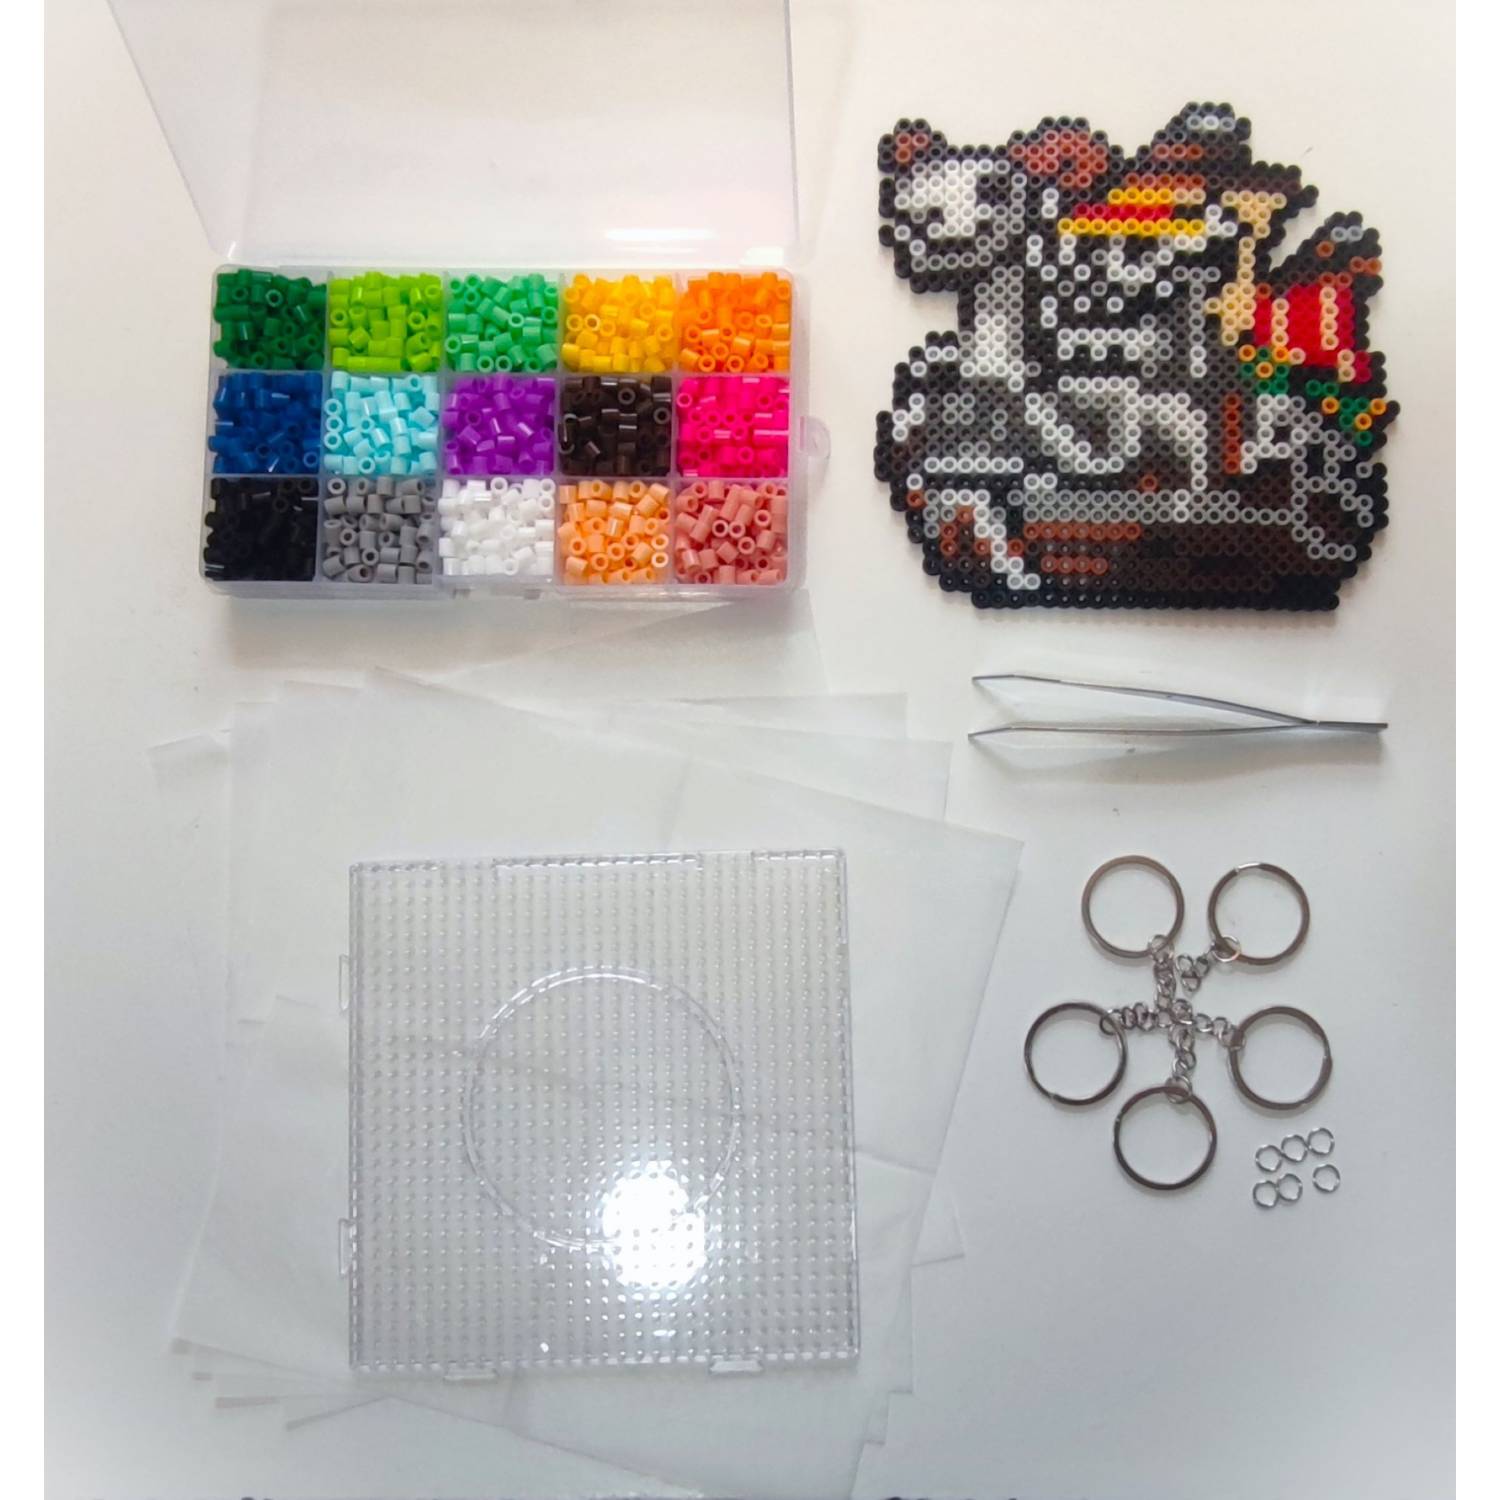 GENERICO Pack 5mm Hama/perler/arktal Beads 24 Colores + Accesorios 2…